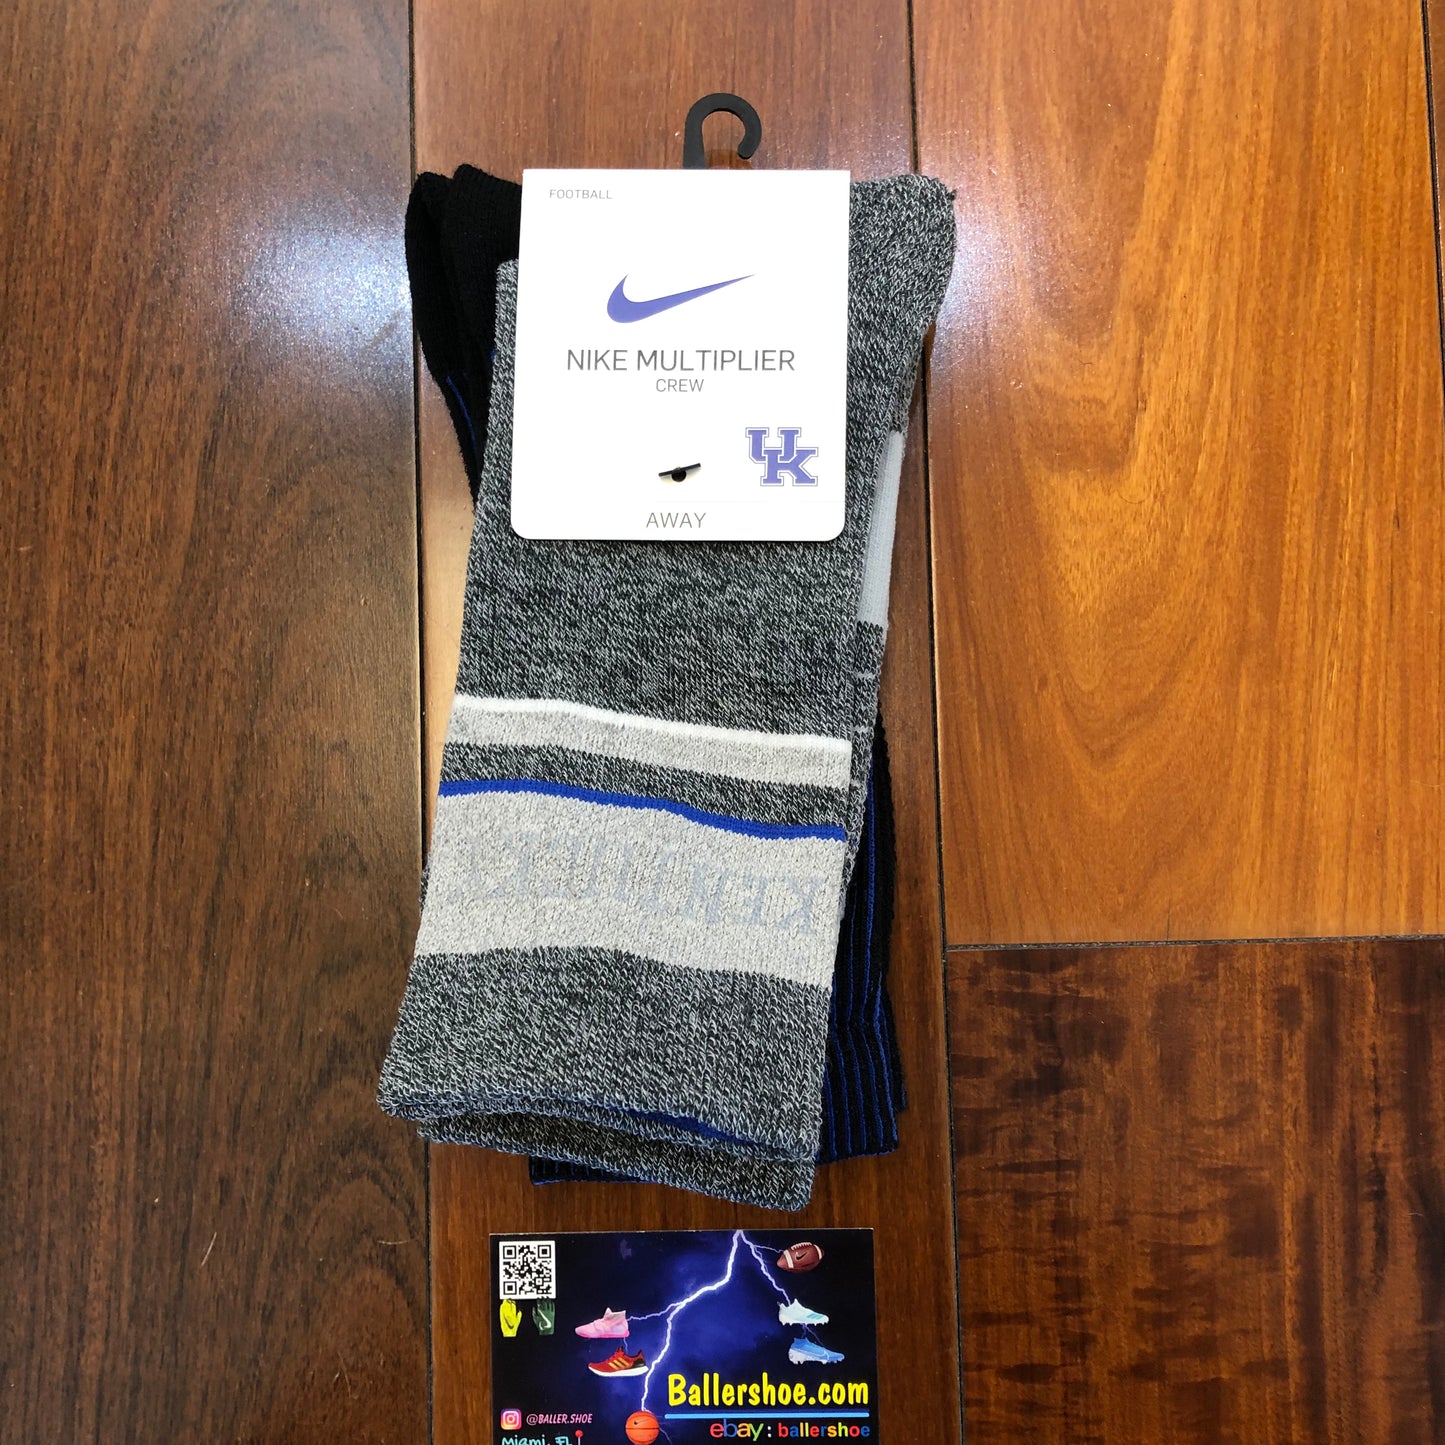 Nike Multiplier Kentucky Wildcats Crew Socks